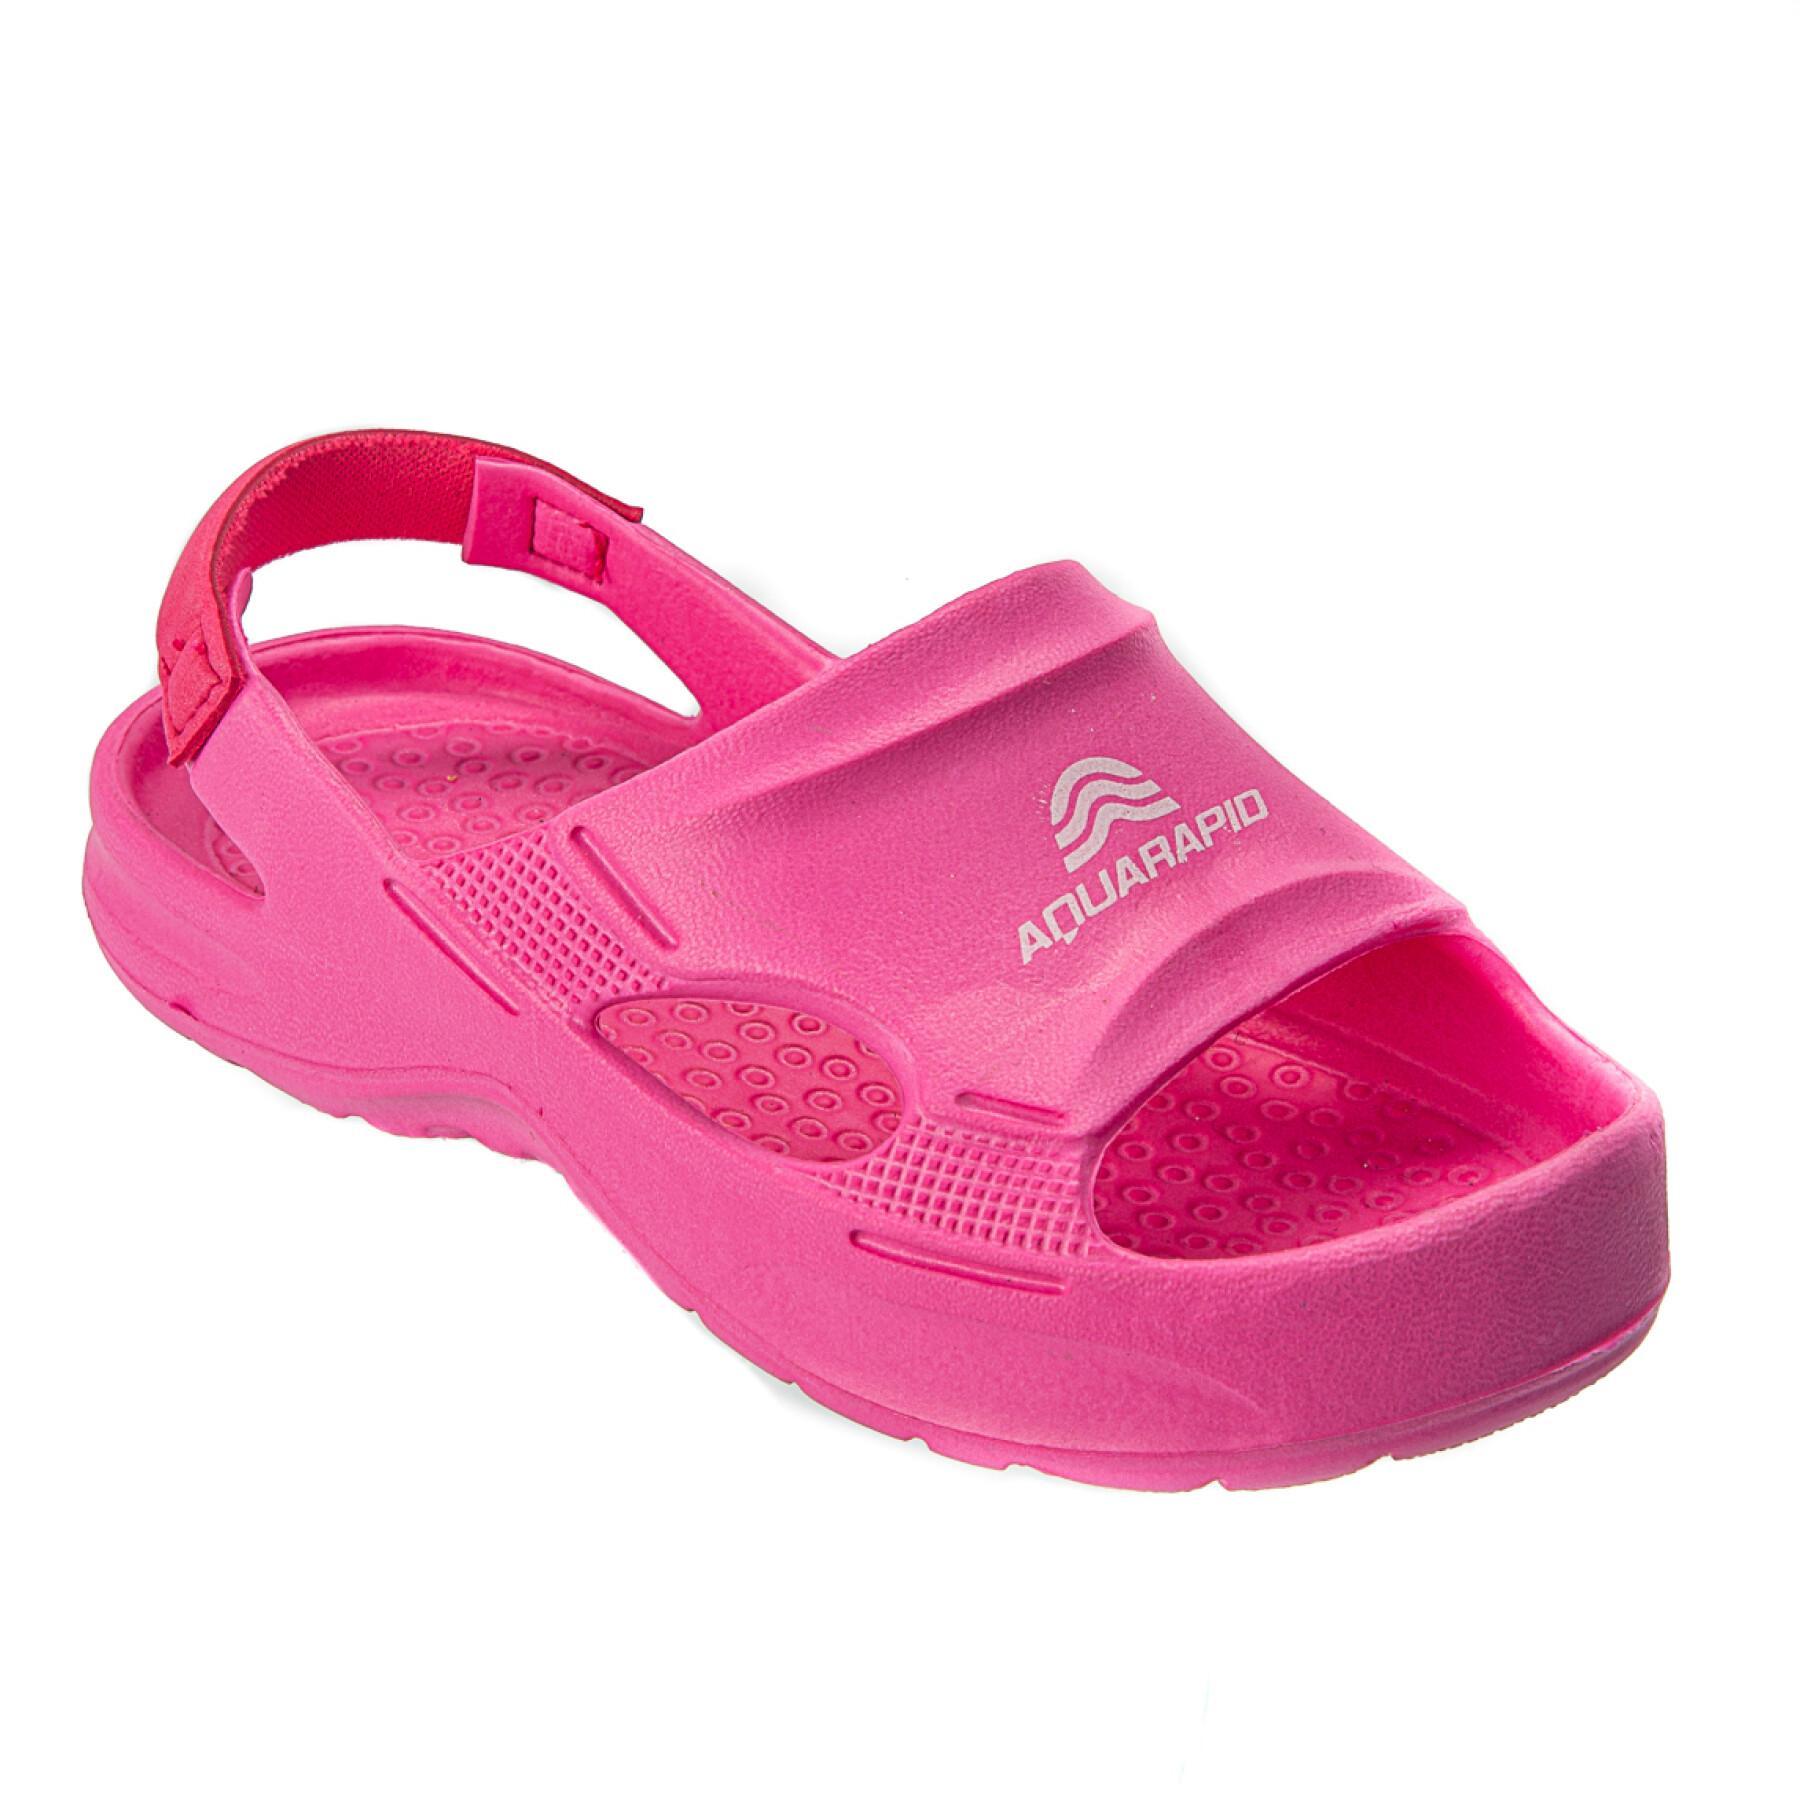 Meisjes sandalen Aquarapid Giba